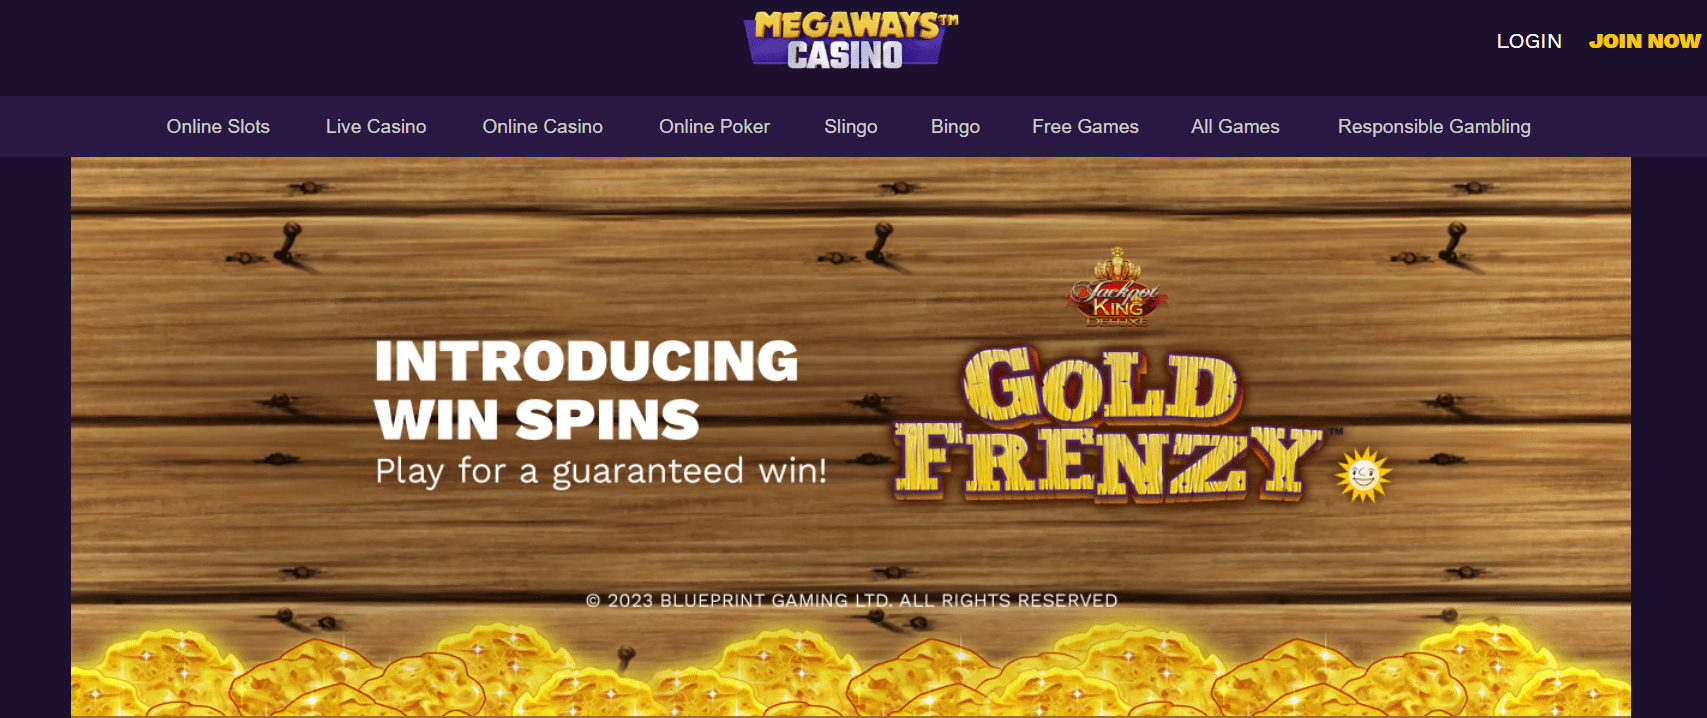 megaways casino review